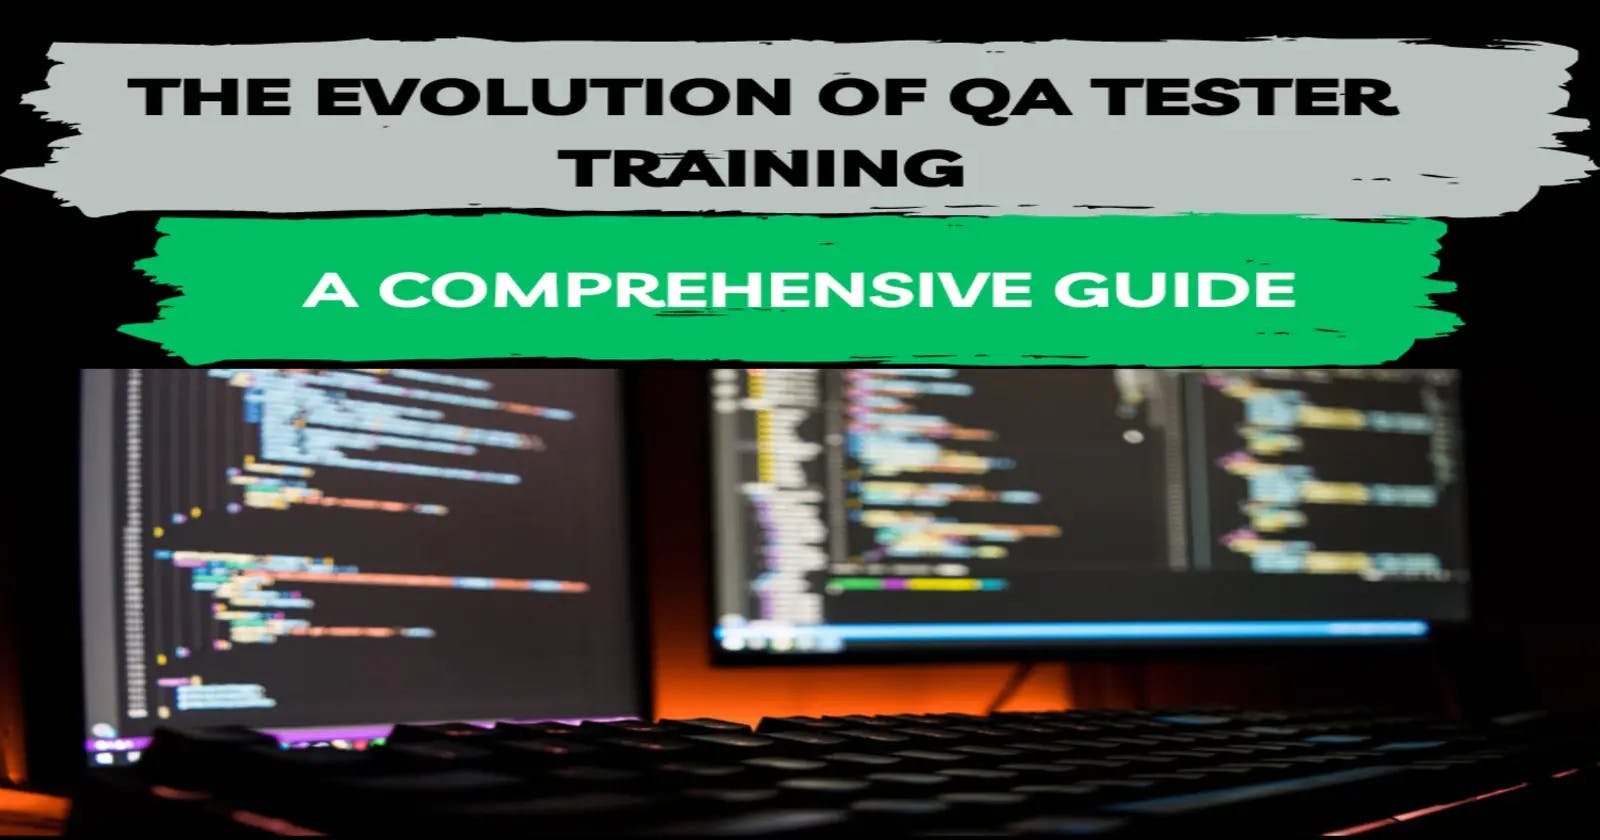 The Evolution of QA Tester Training: A Comprehensive Guide